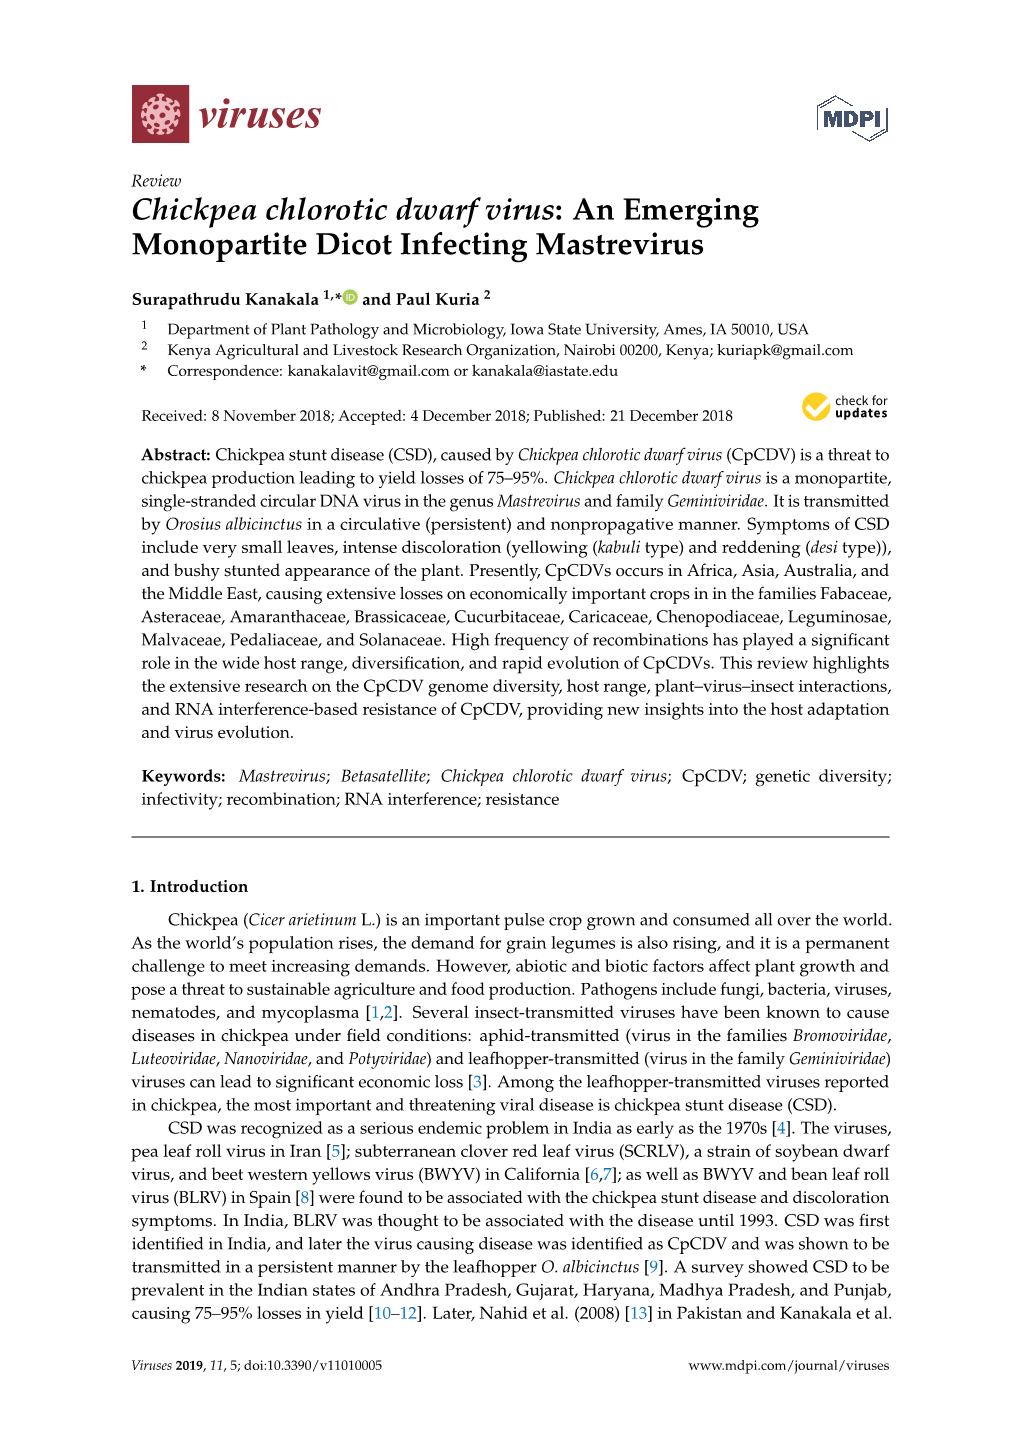 Chickpea Chlorotic Dwarf Virus: an Emerging Monopartite Dicot Infecting Mastrevirus